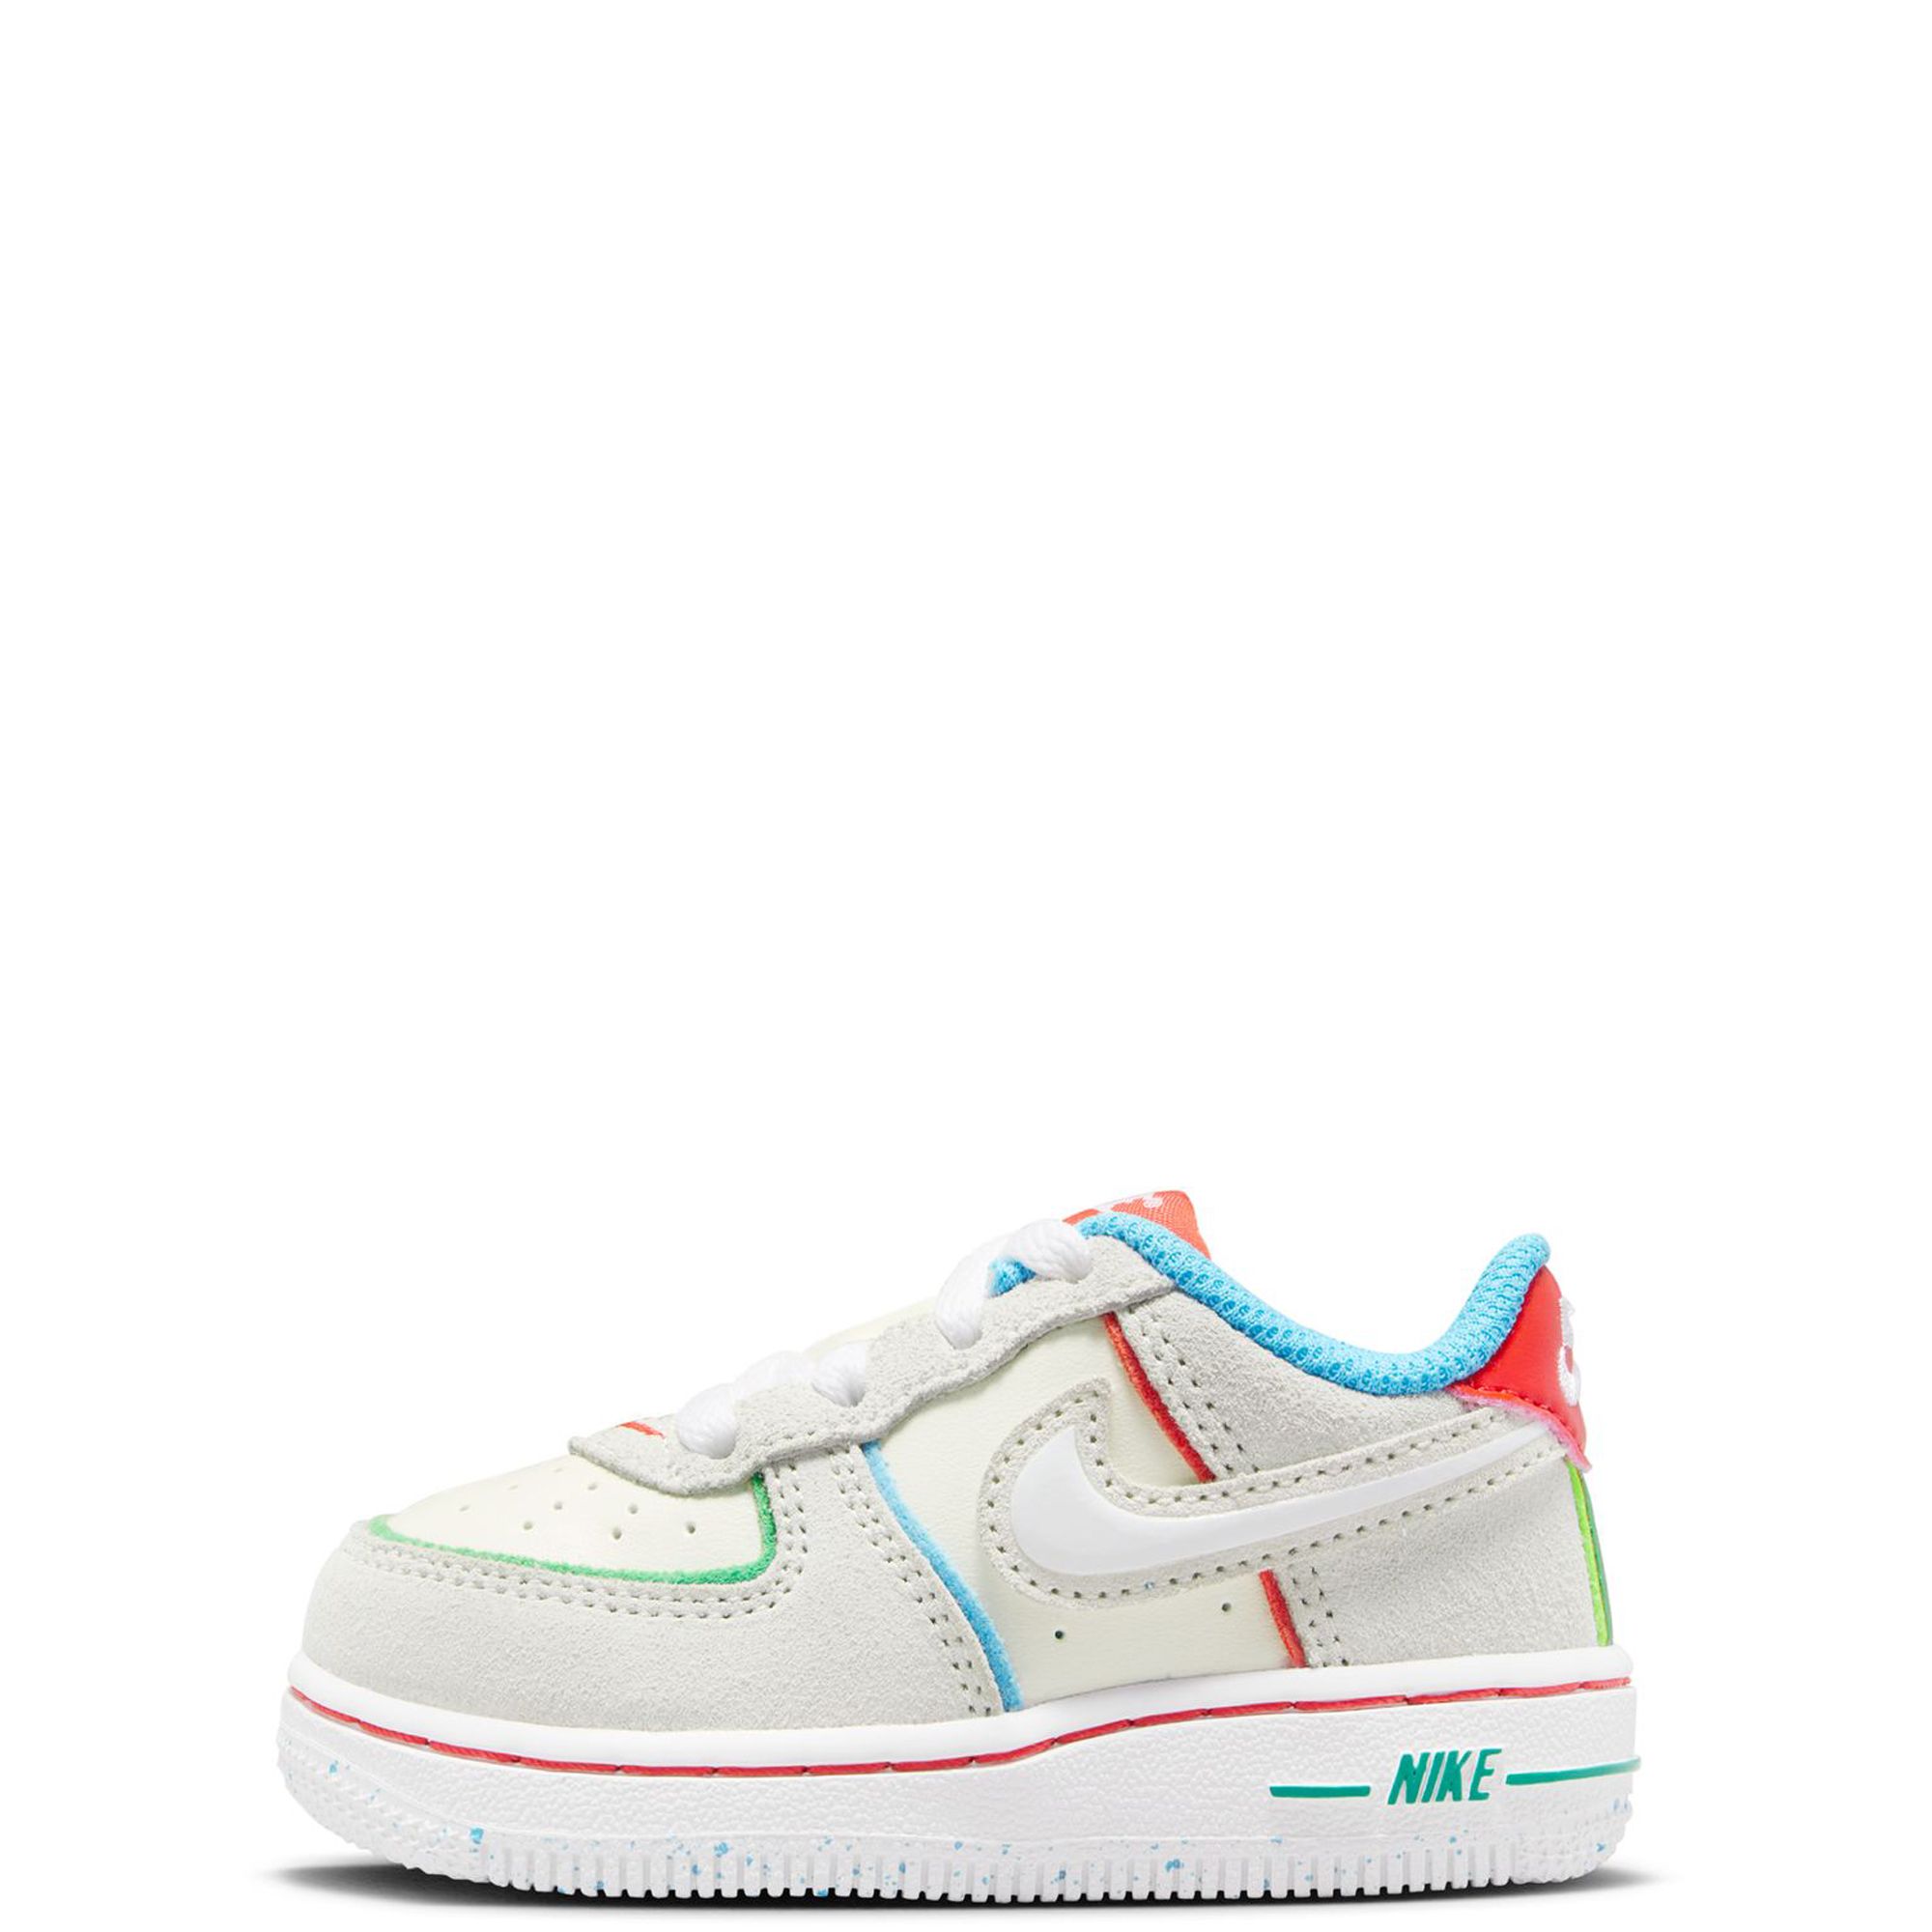 New Nike Force 1 Low Unisex Baby Shoes Size 4c Boy/Girl blue white